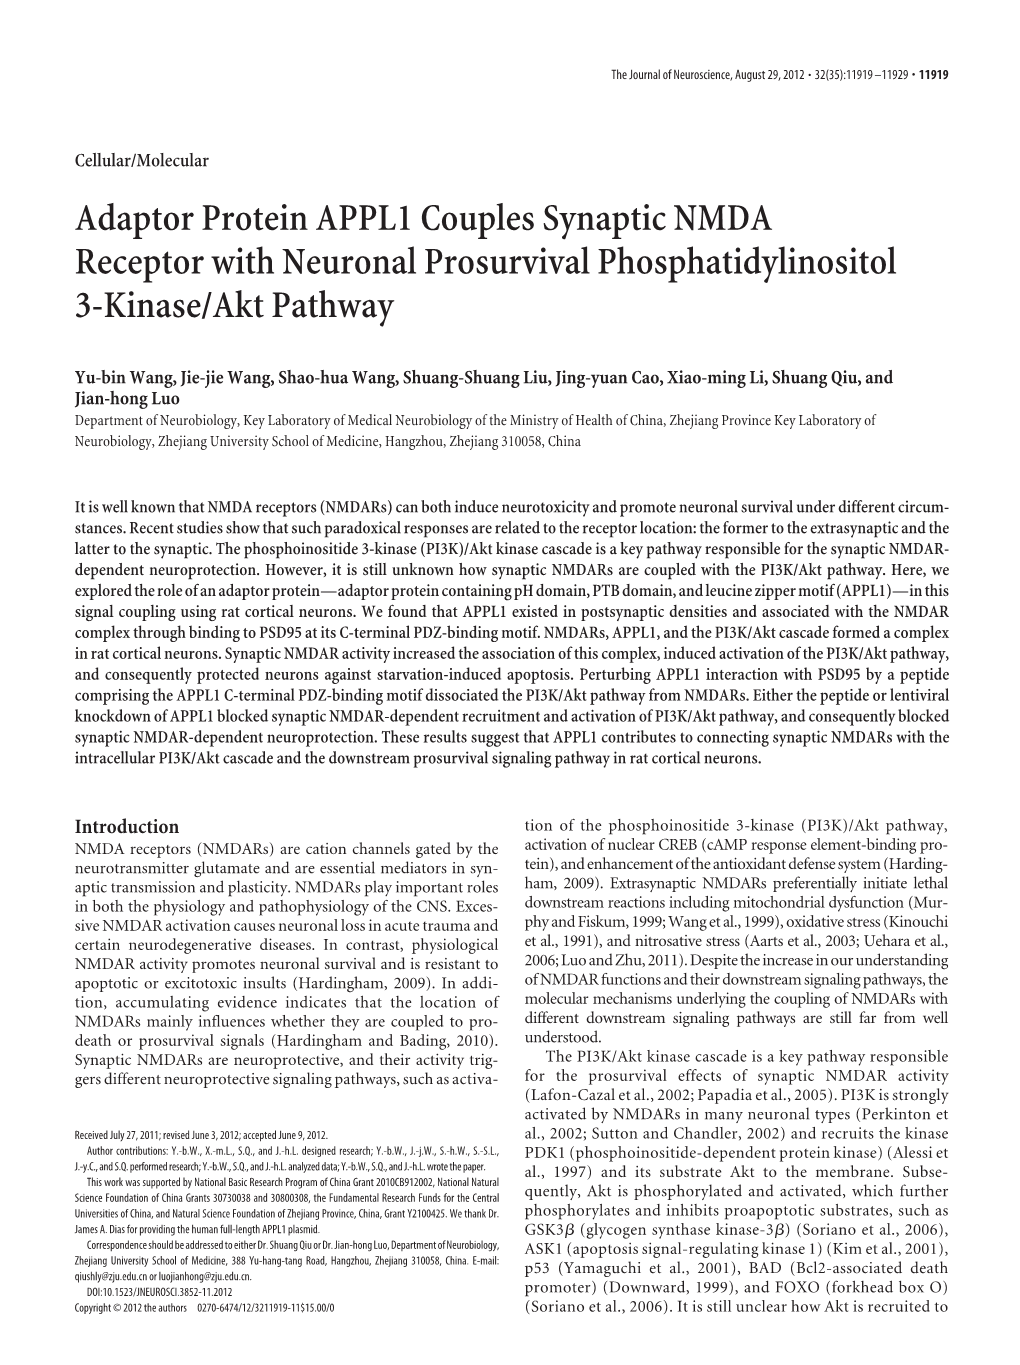 Adaptor Protein APPL1 Couples Synaptic NMDA Receptor with Neuronal Prosurvival Phosphatidylinositol 3-Kinase/Akt Pathway